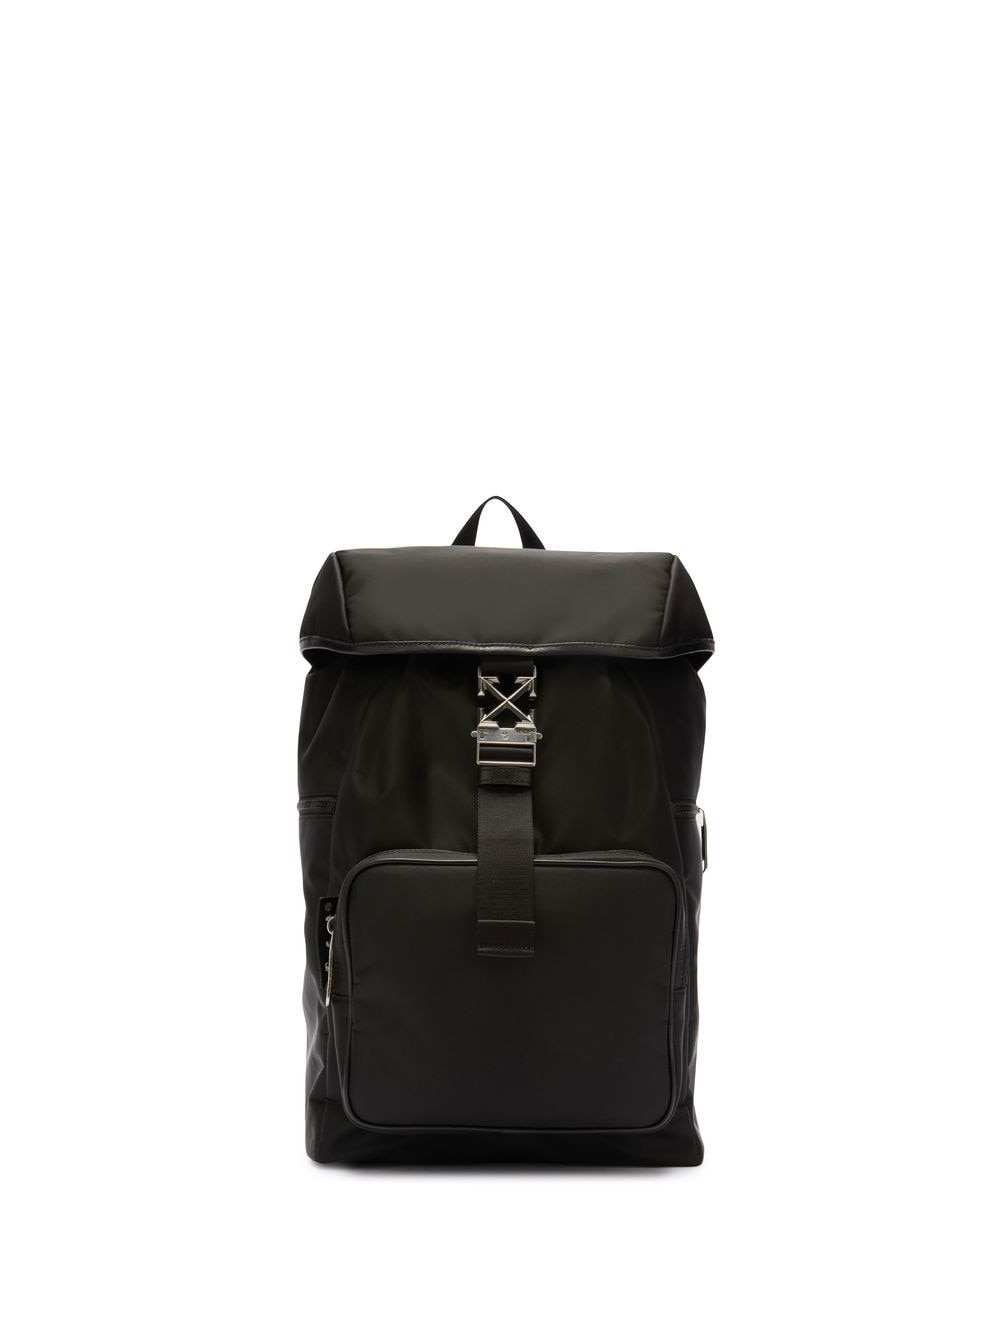 Arrow Tuc nylon backpack